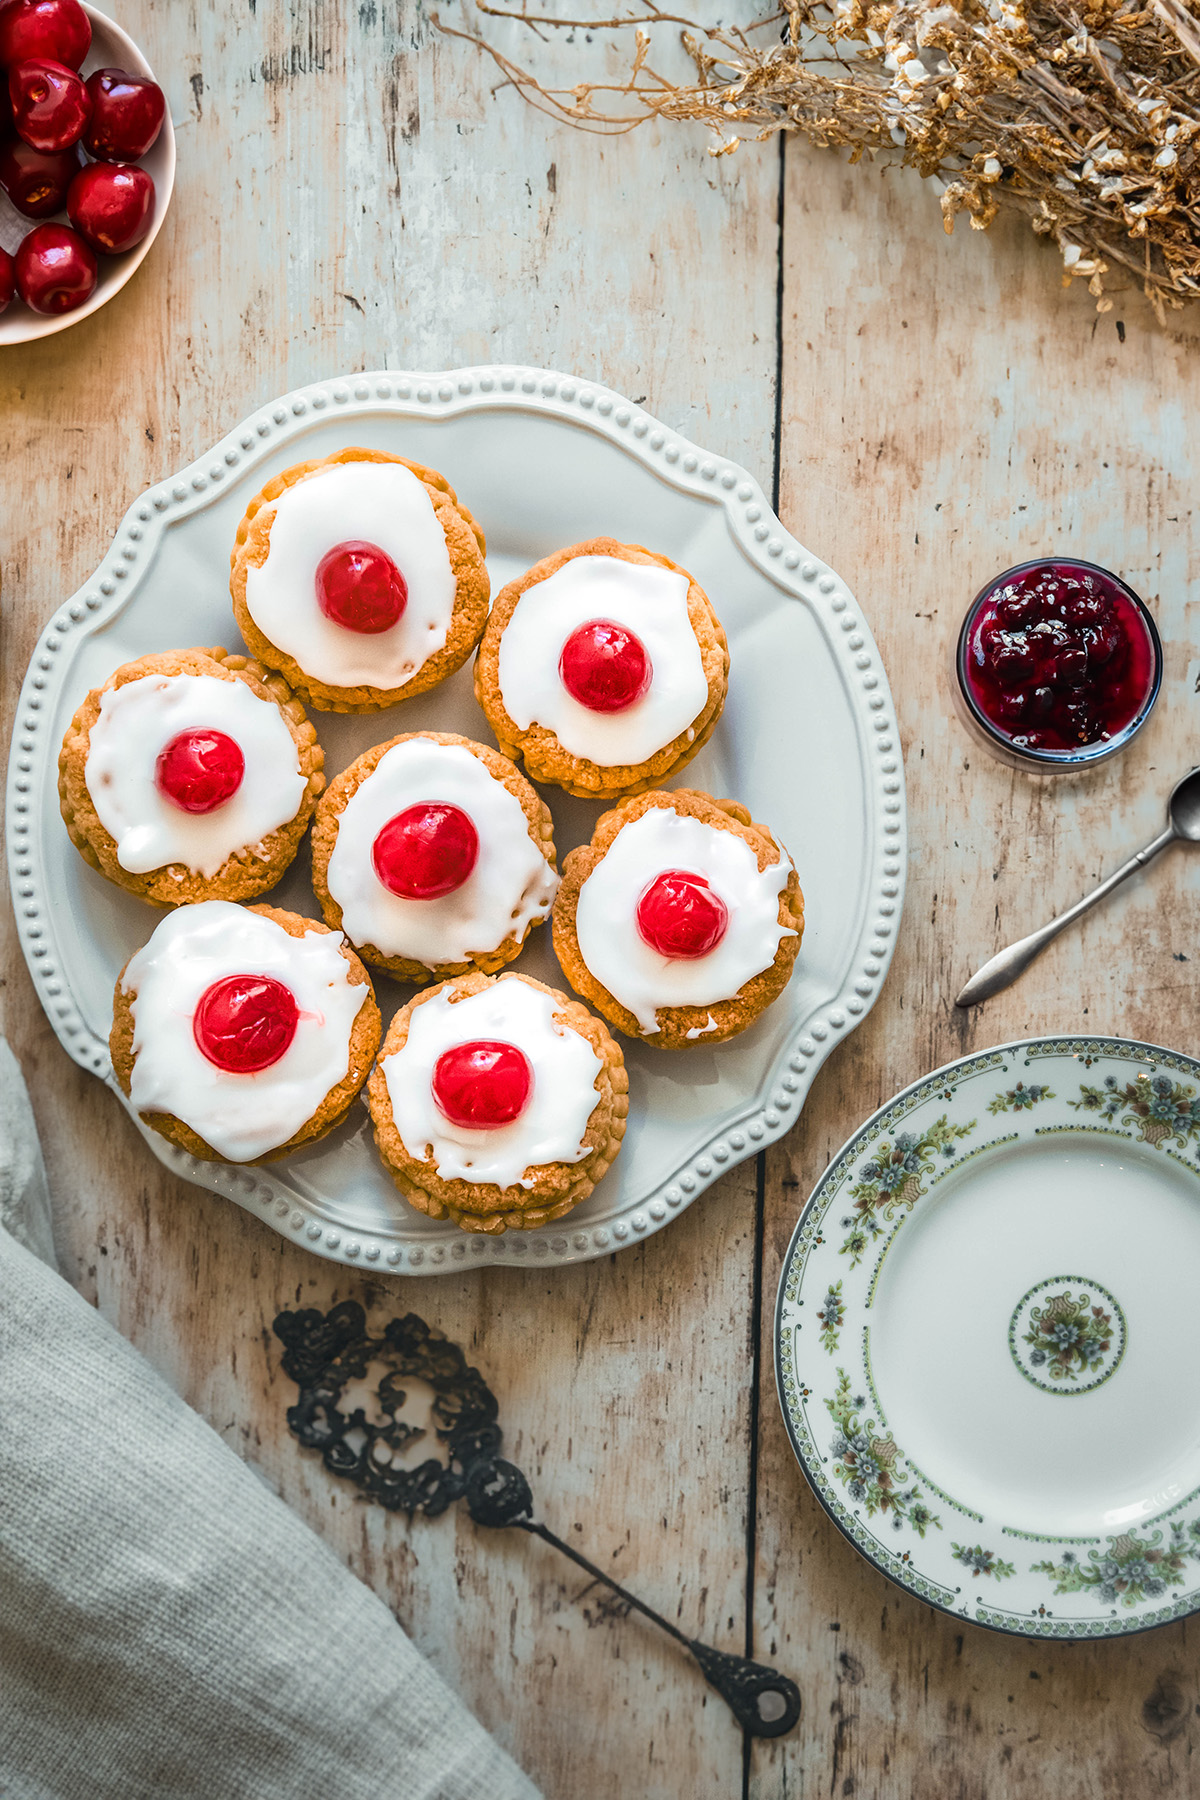 Cherry Bakewell Tart Recipe: Mini Frangipane Tarts